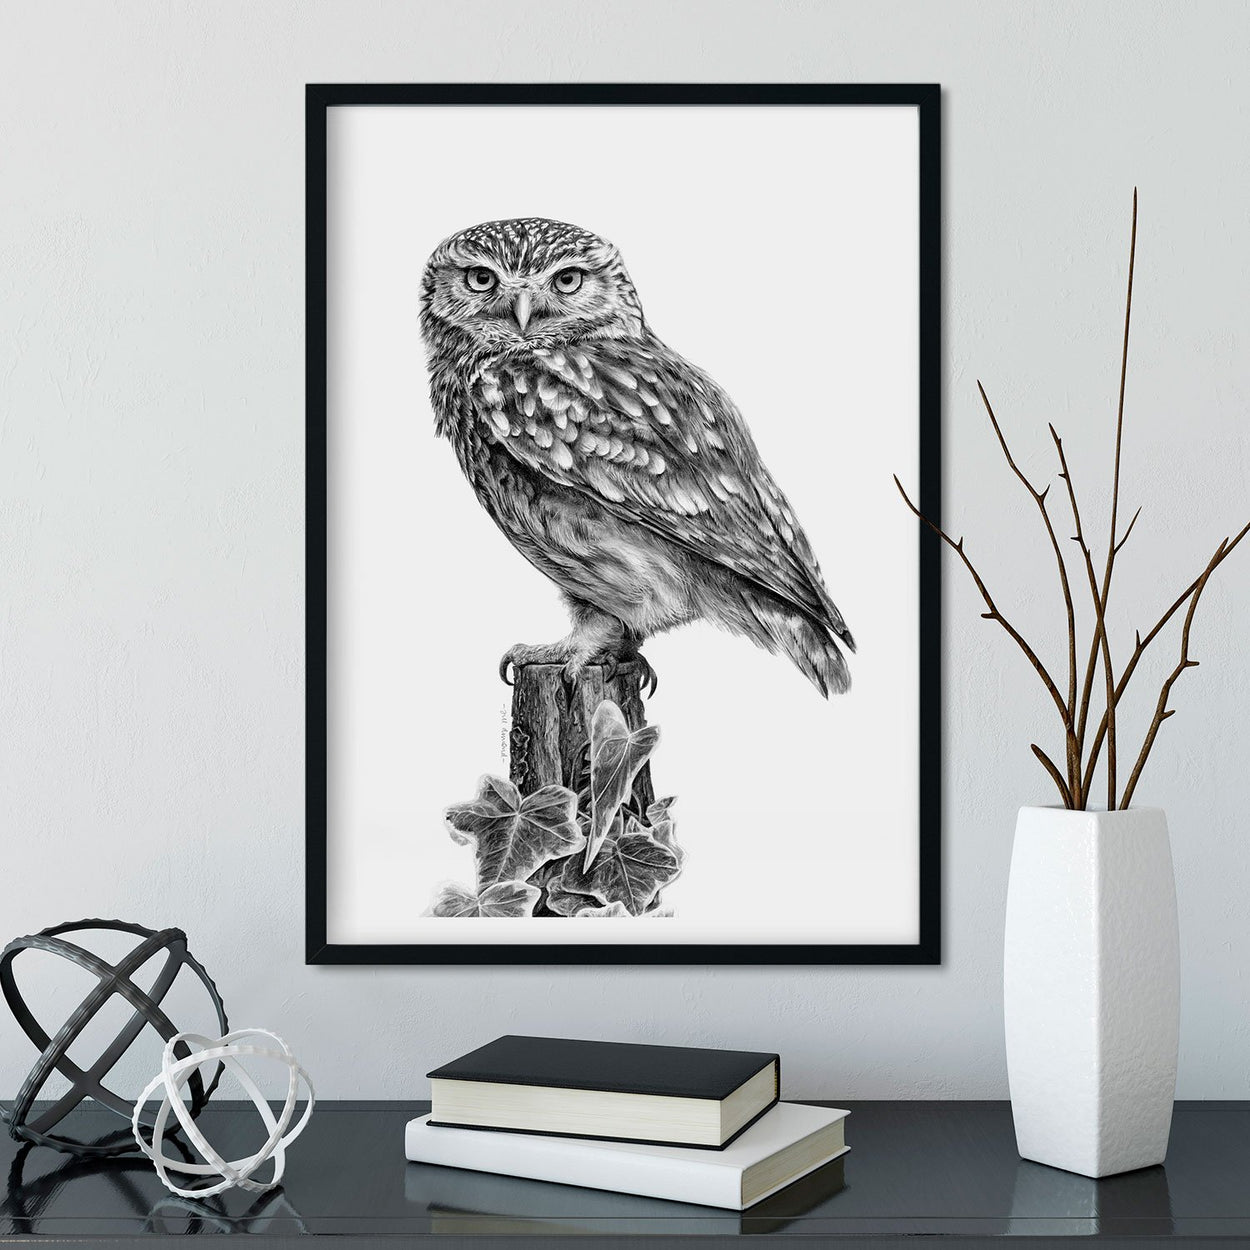 Little Owl Wall Art Frame - The Thriving Wild